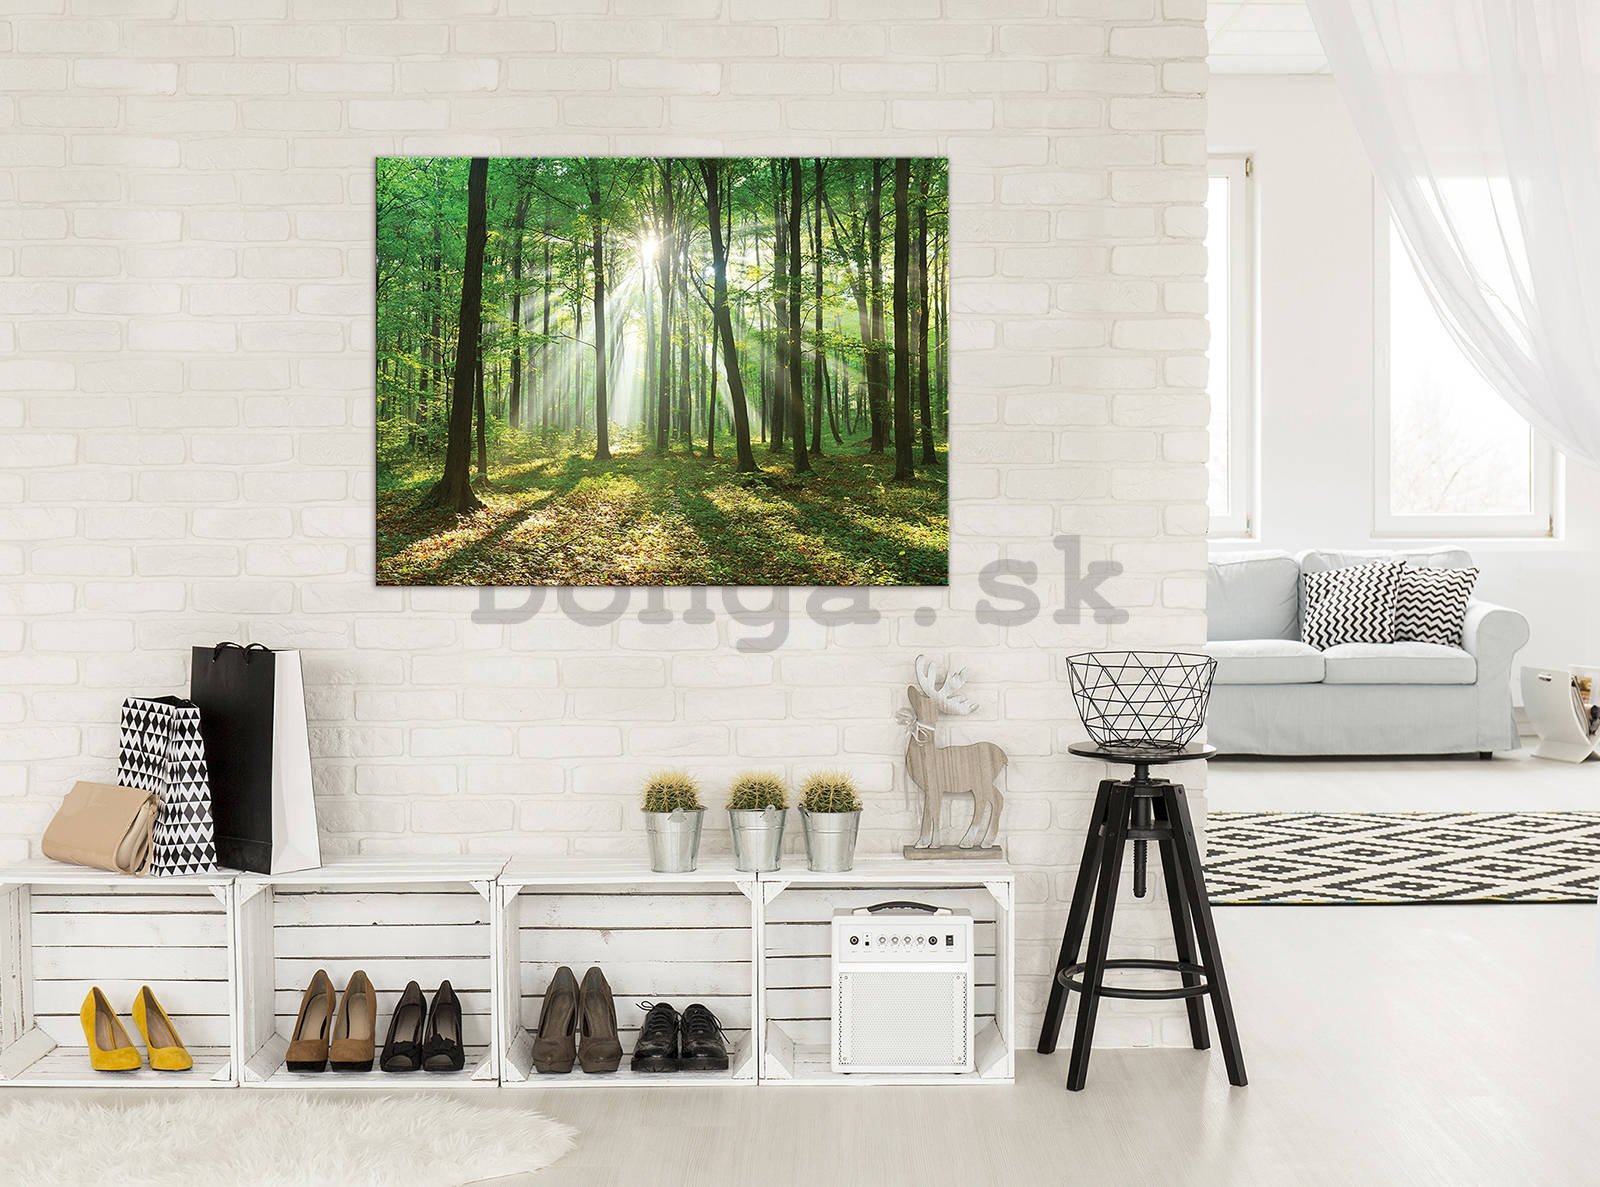 Obraz na plátne: Slnko v lese (3) - 80x60 cm